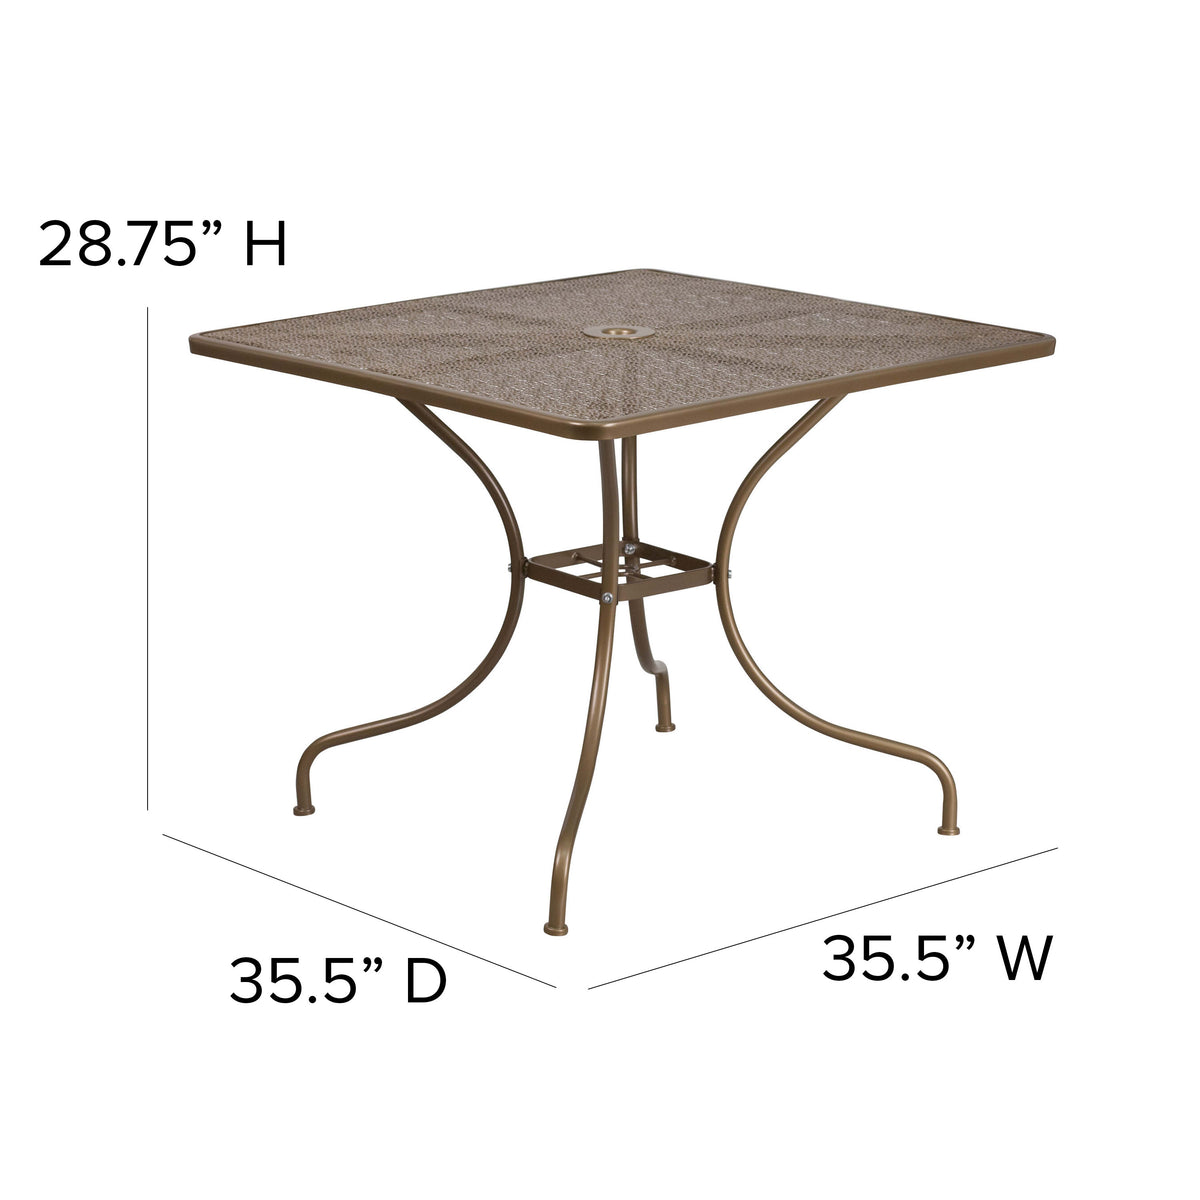 Gold |#| 35.5inch Square Gold Indoor-Outdoor Steel Patio Table-Umbrella Hole-Restaurant